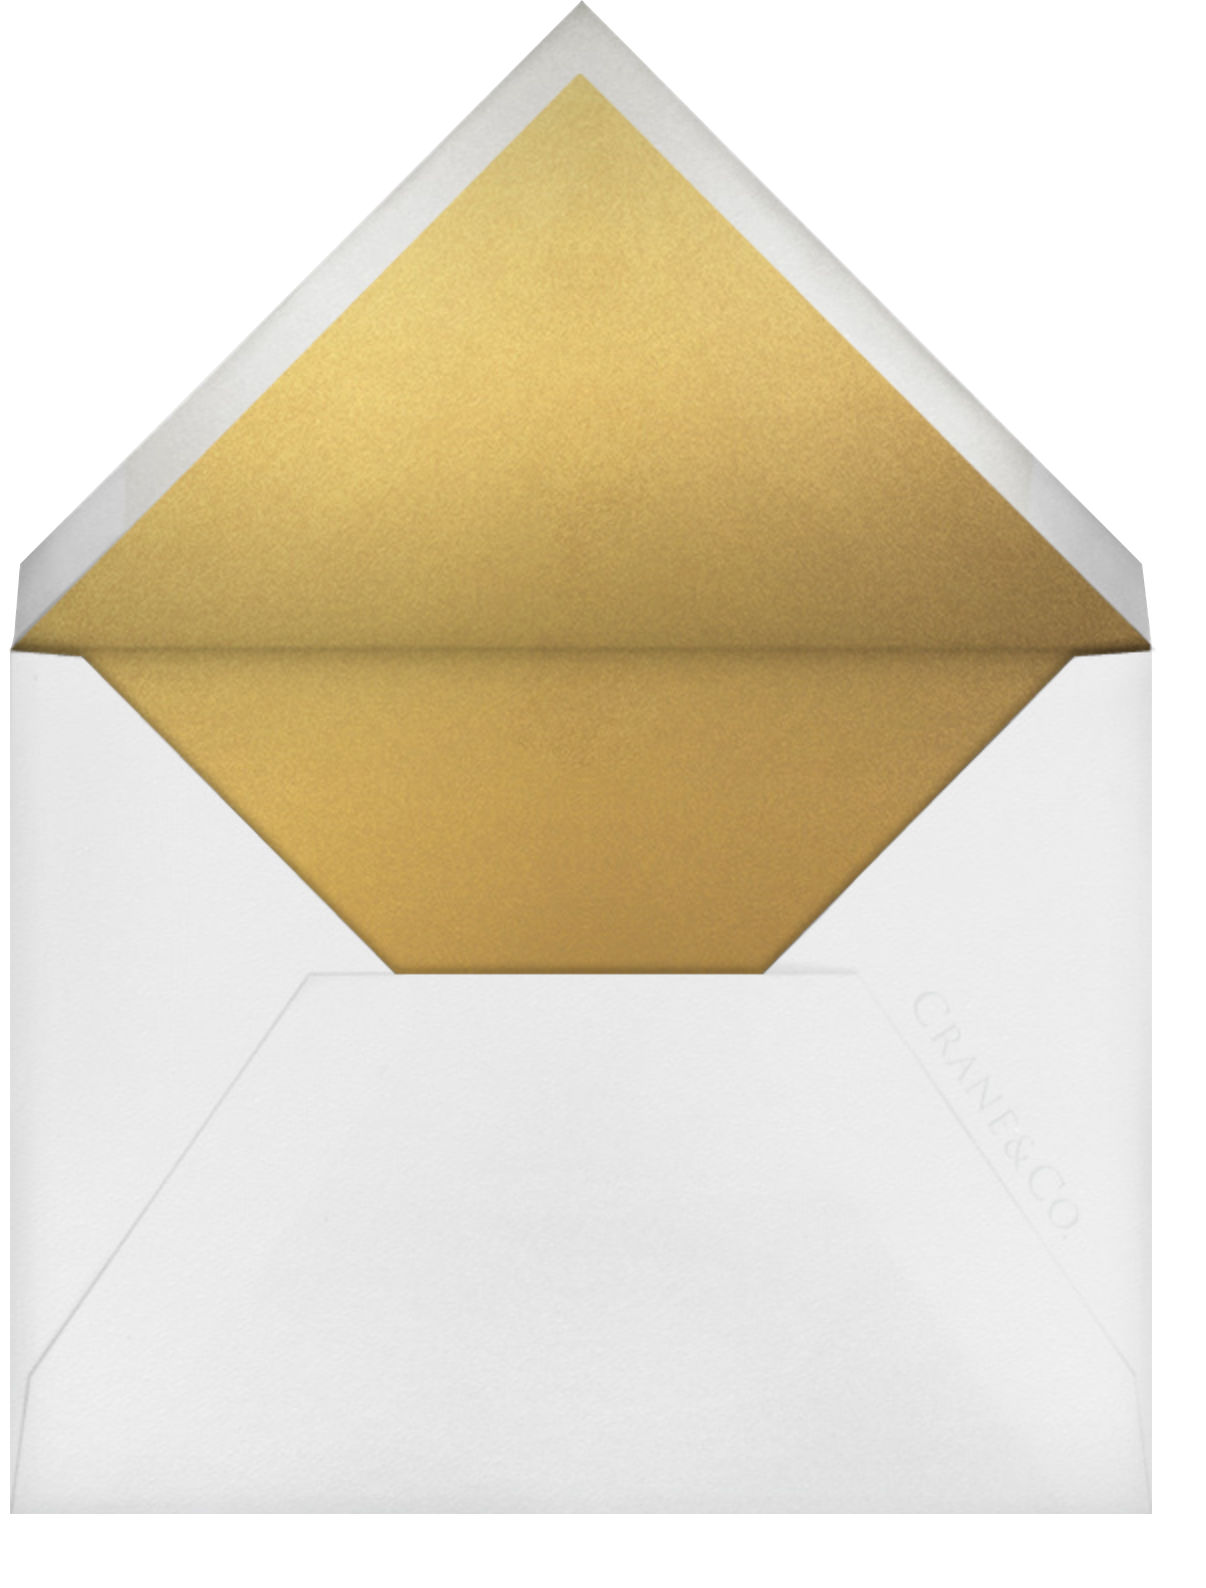 Maidstone (Thank You) - Medium Gold - Crane & Co. - Envelope